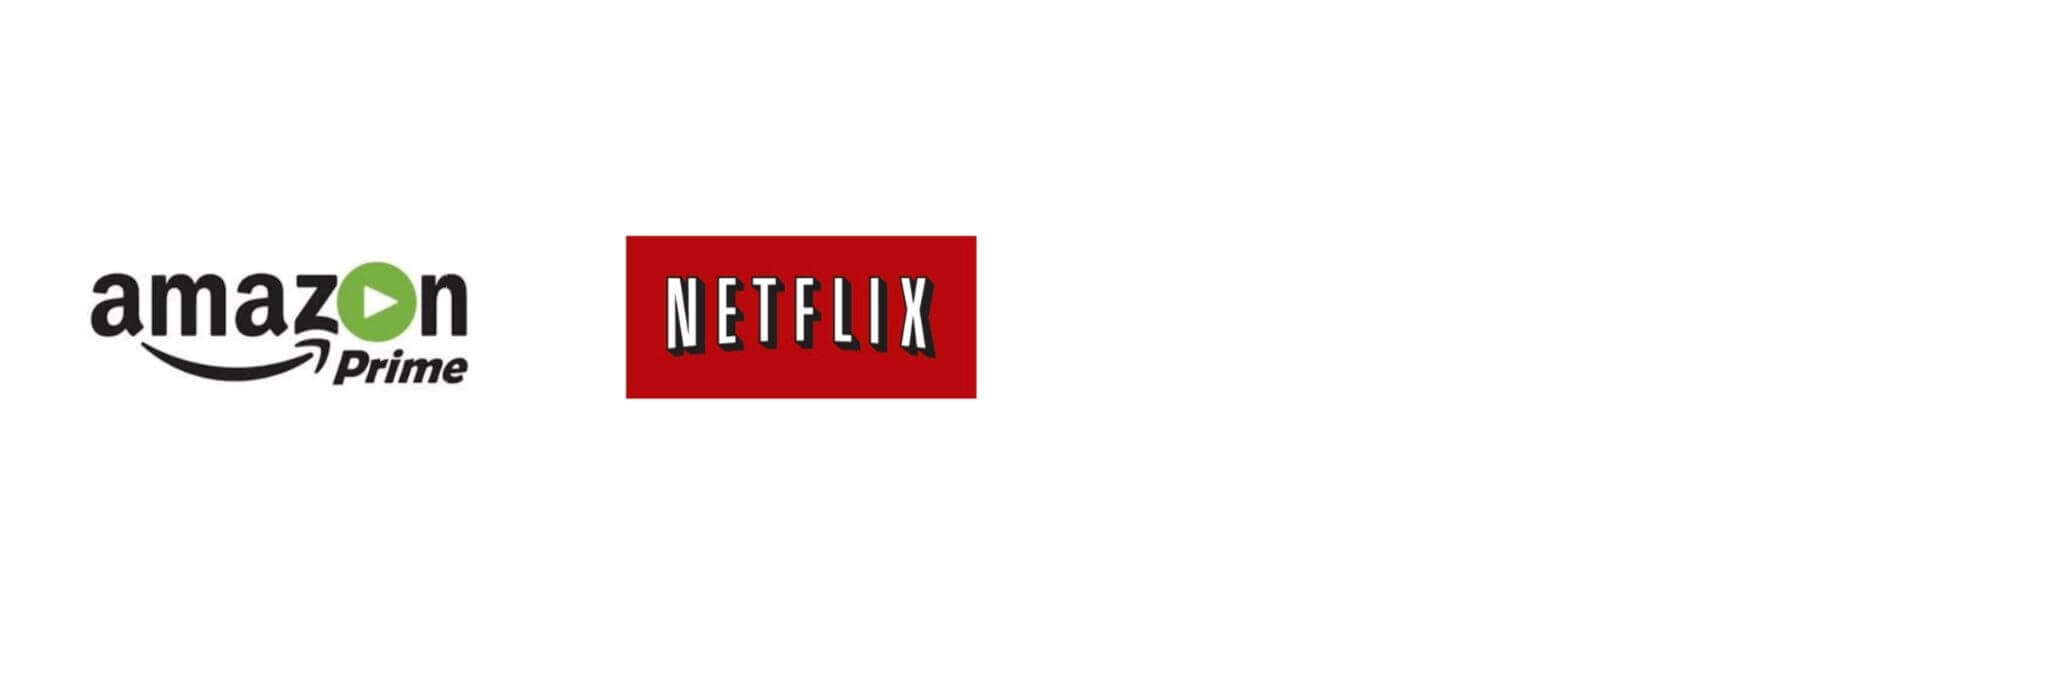 Amazon Prime and Netflix Logos